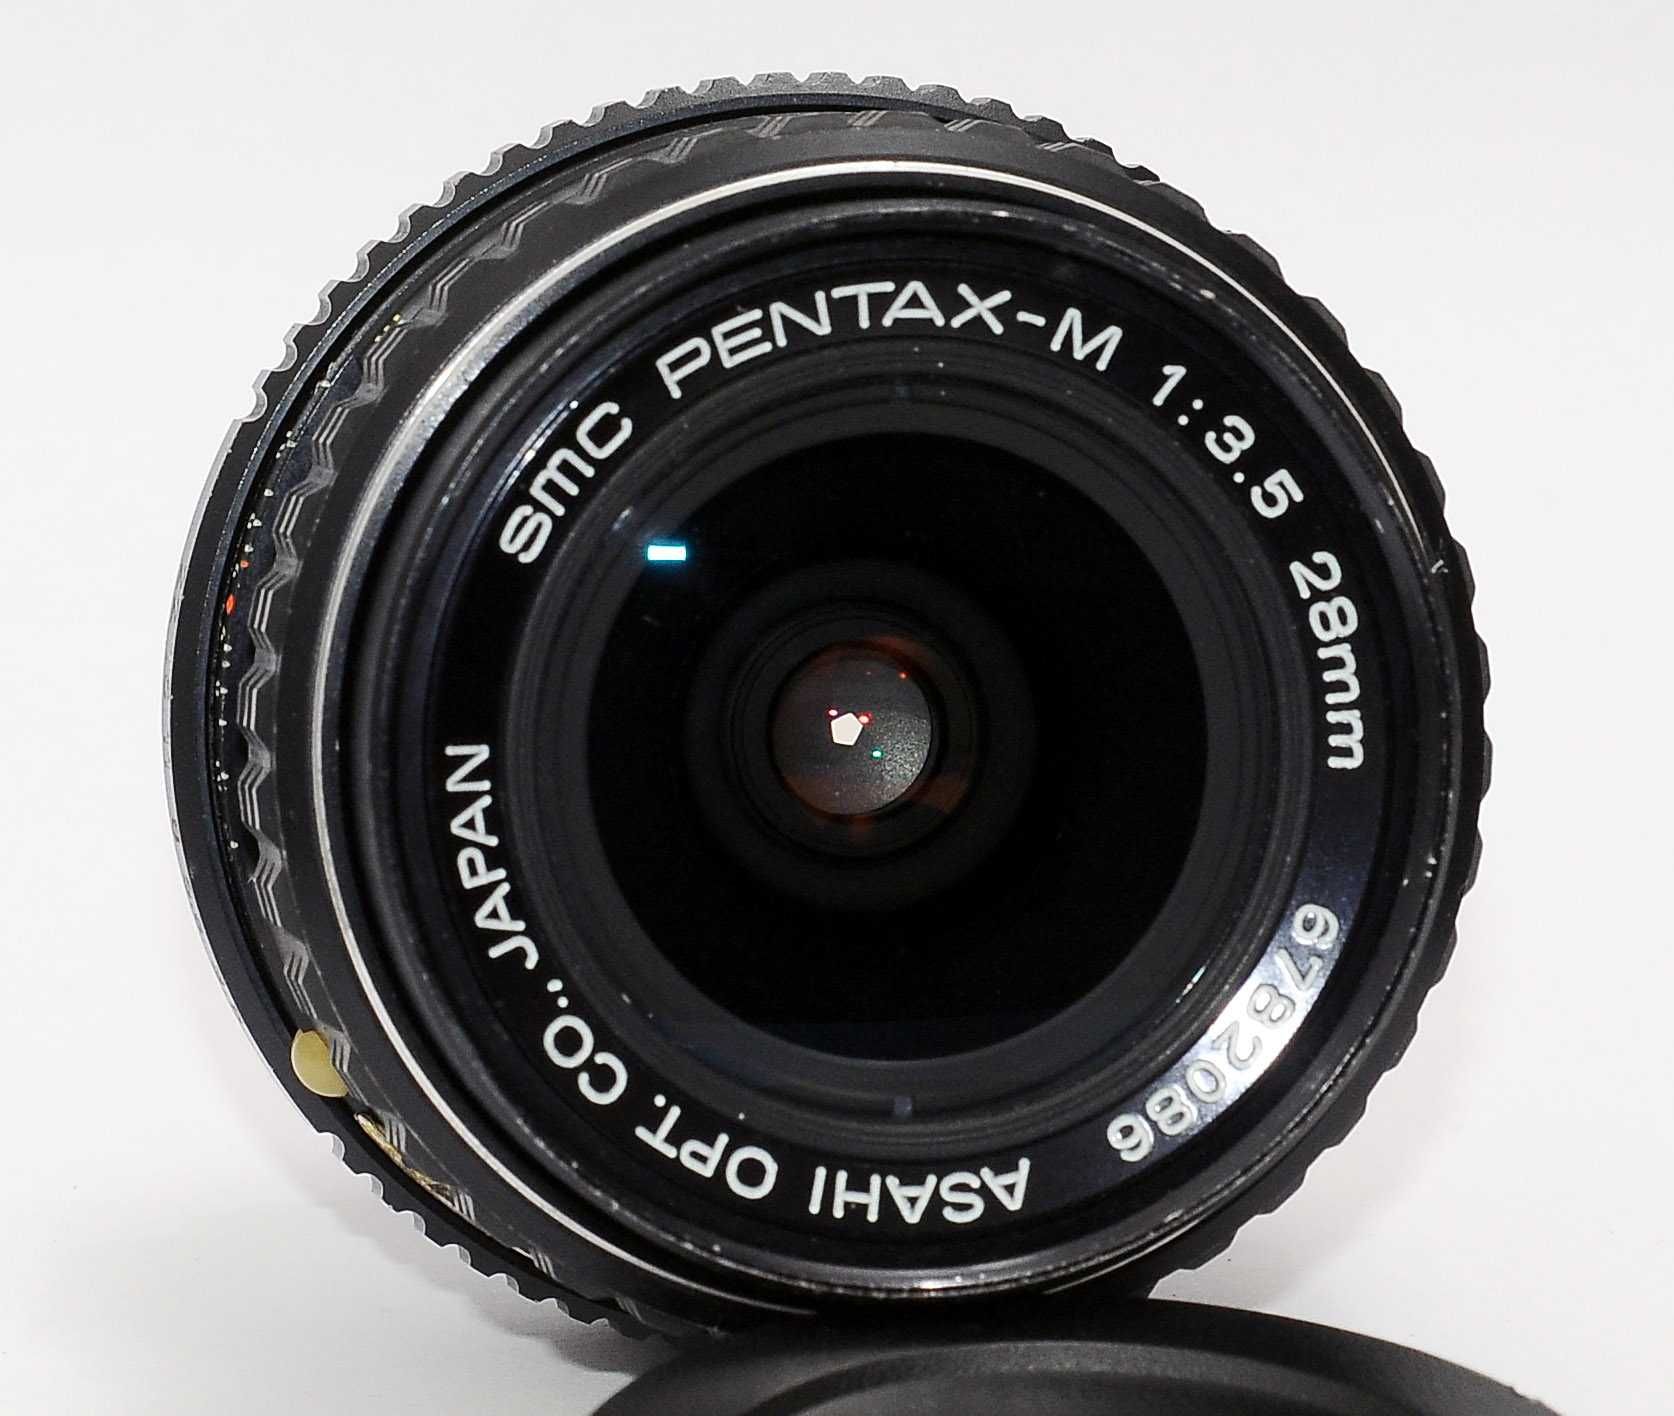 PENTAX-M 28mm F/3.5 Lens Объектив Пентакс Фильтр Filter